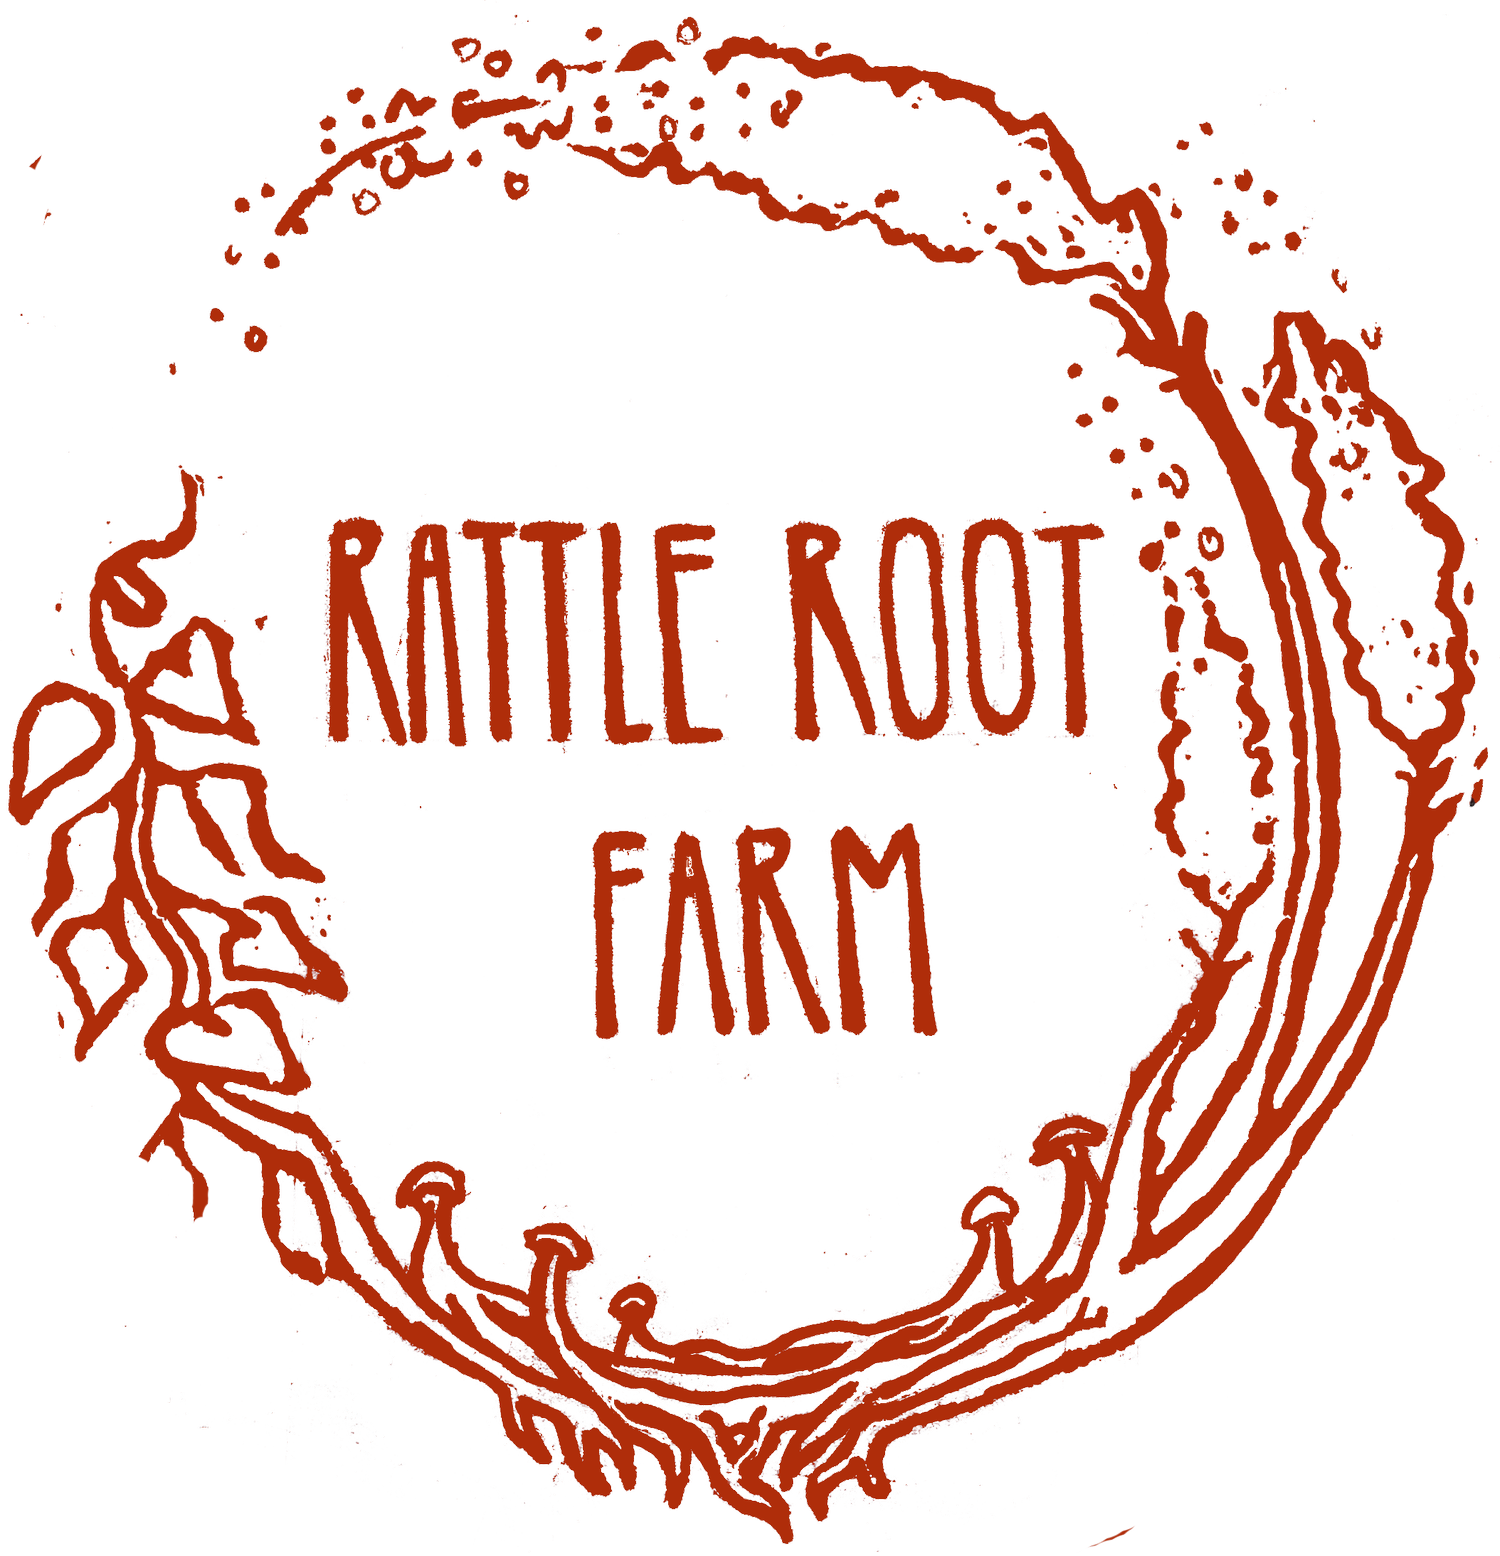 Rattle Root Farm